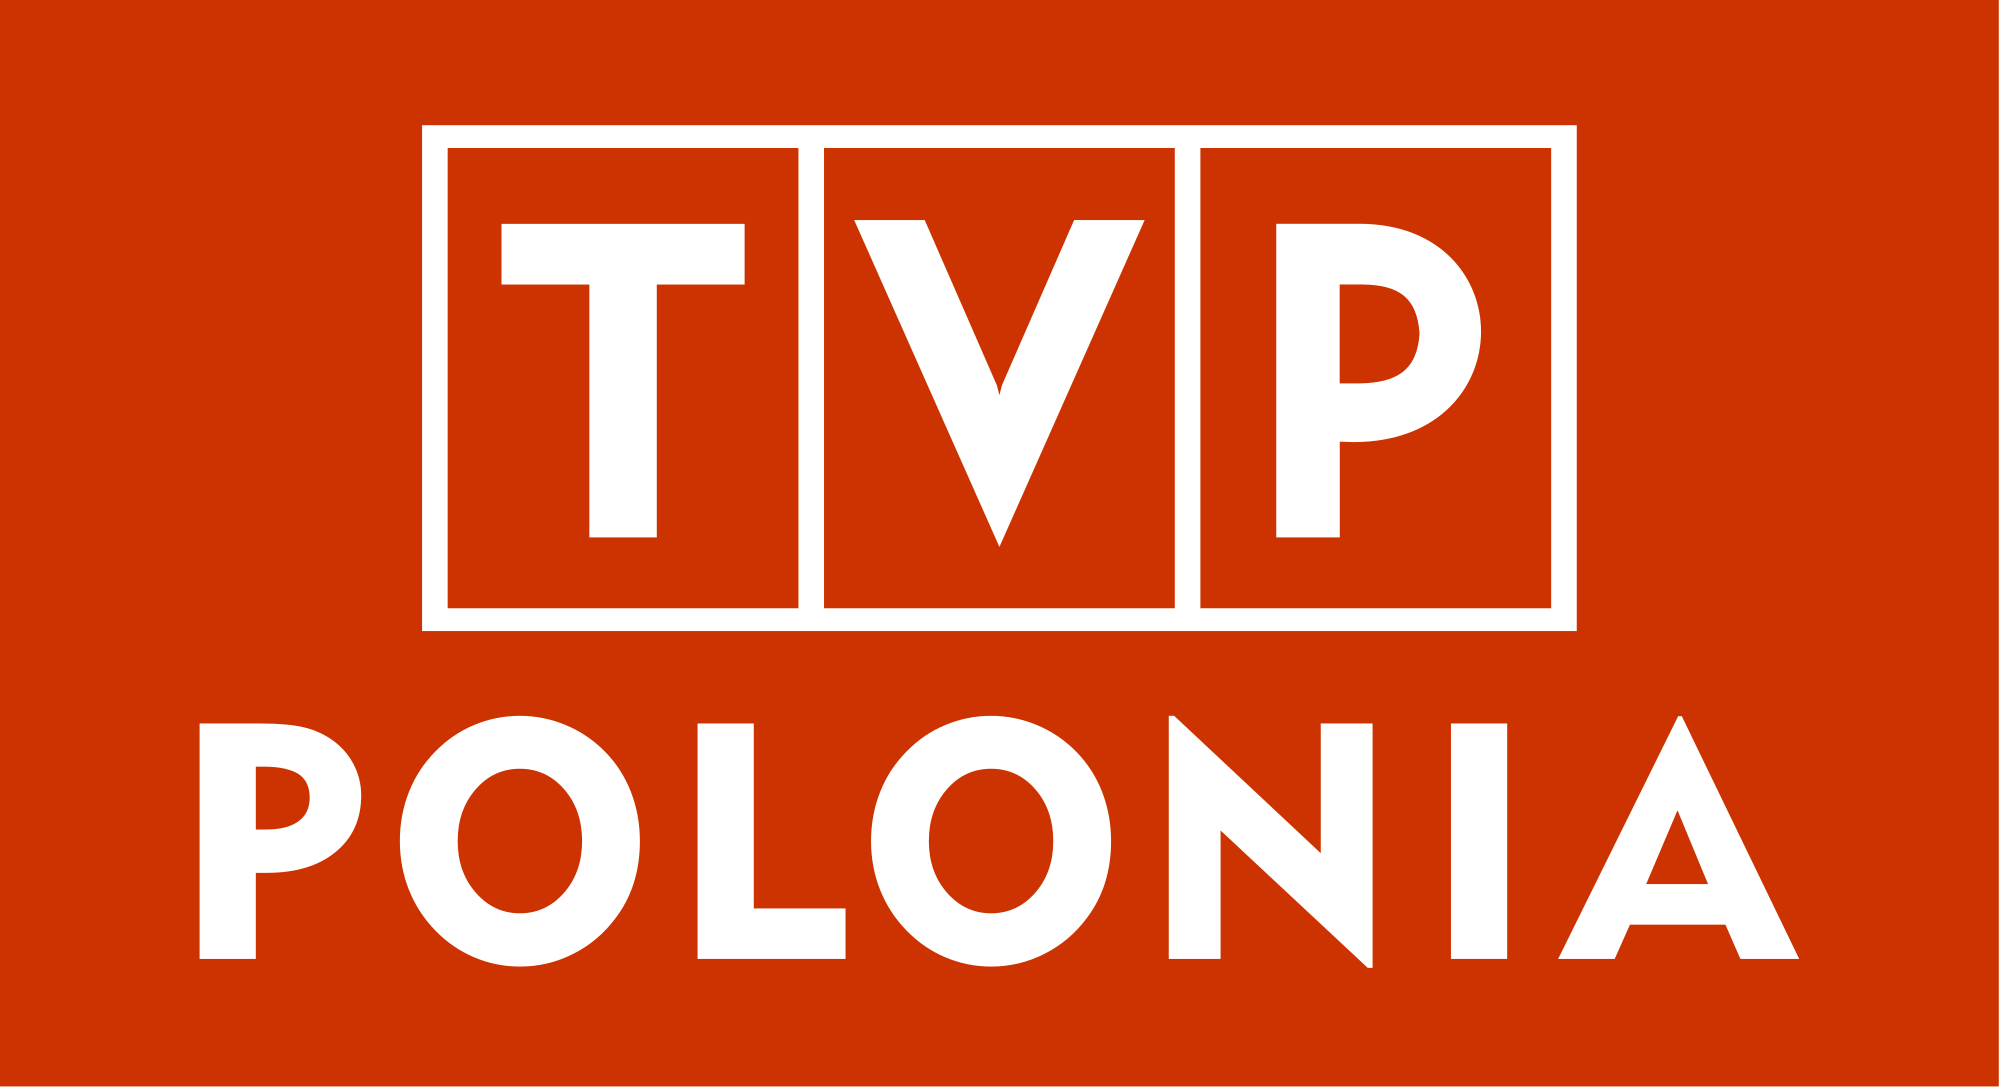 TVP Logo - TVP Polonia | Mihsign Vision | FANDOM powered by Wikia